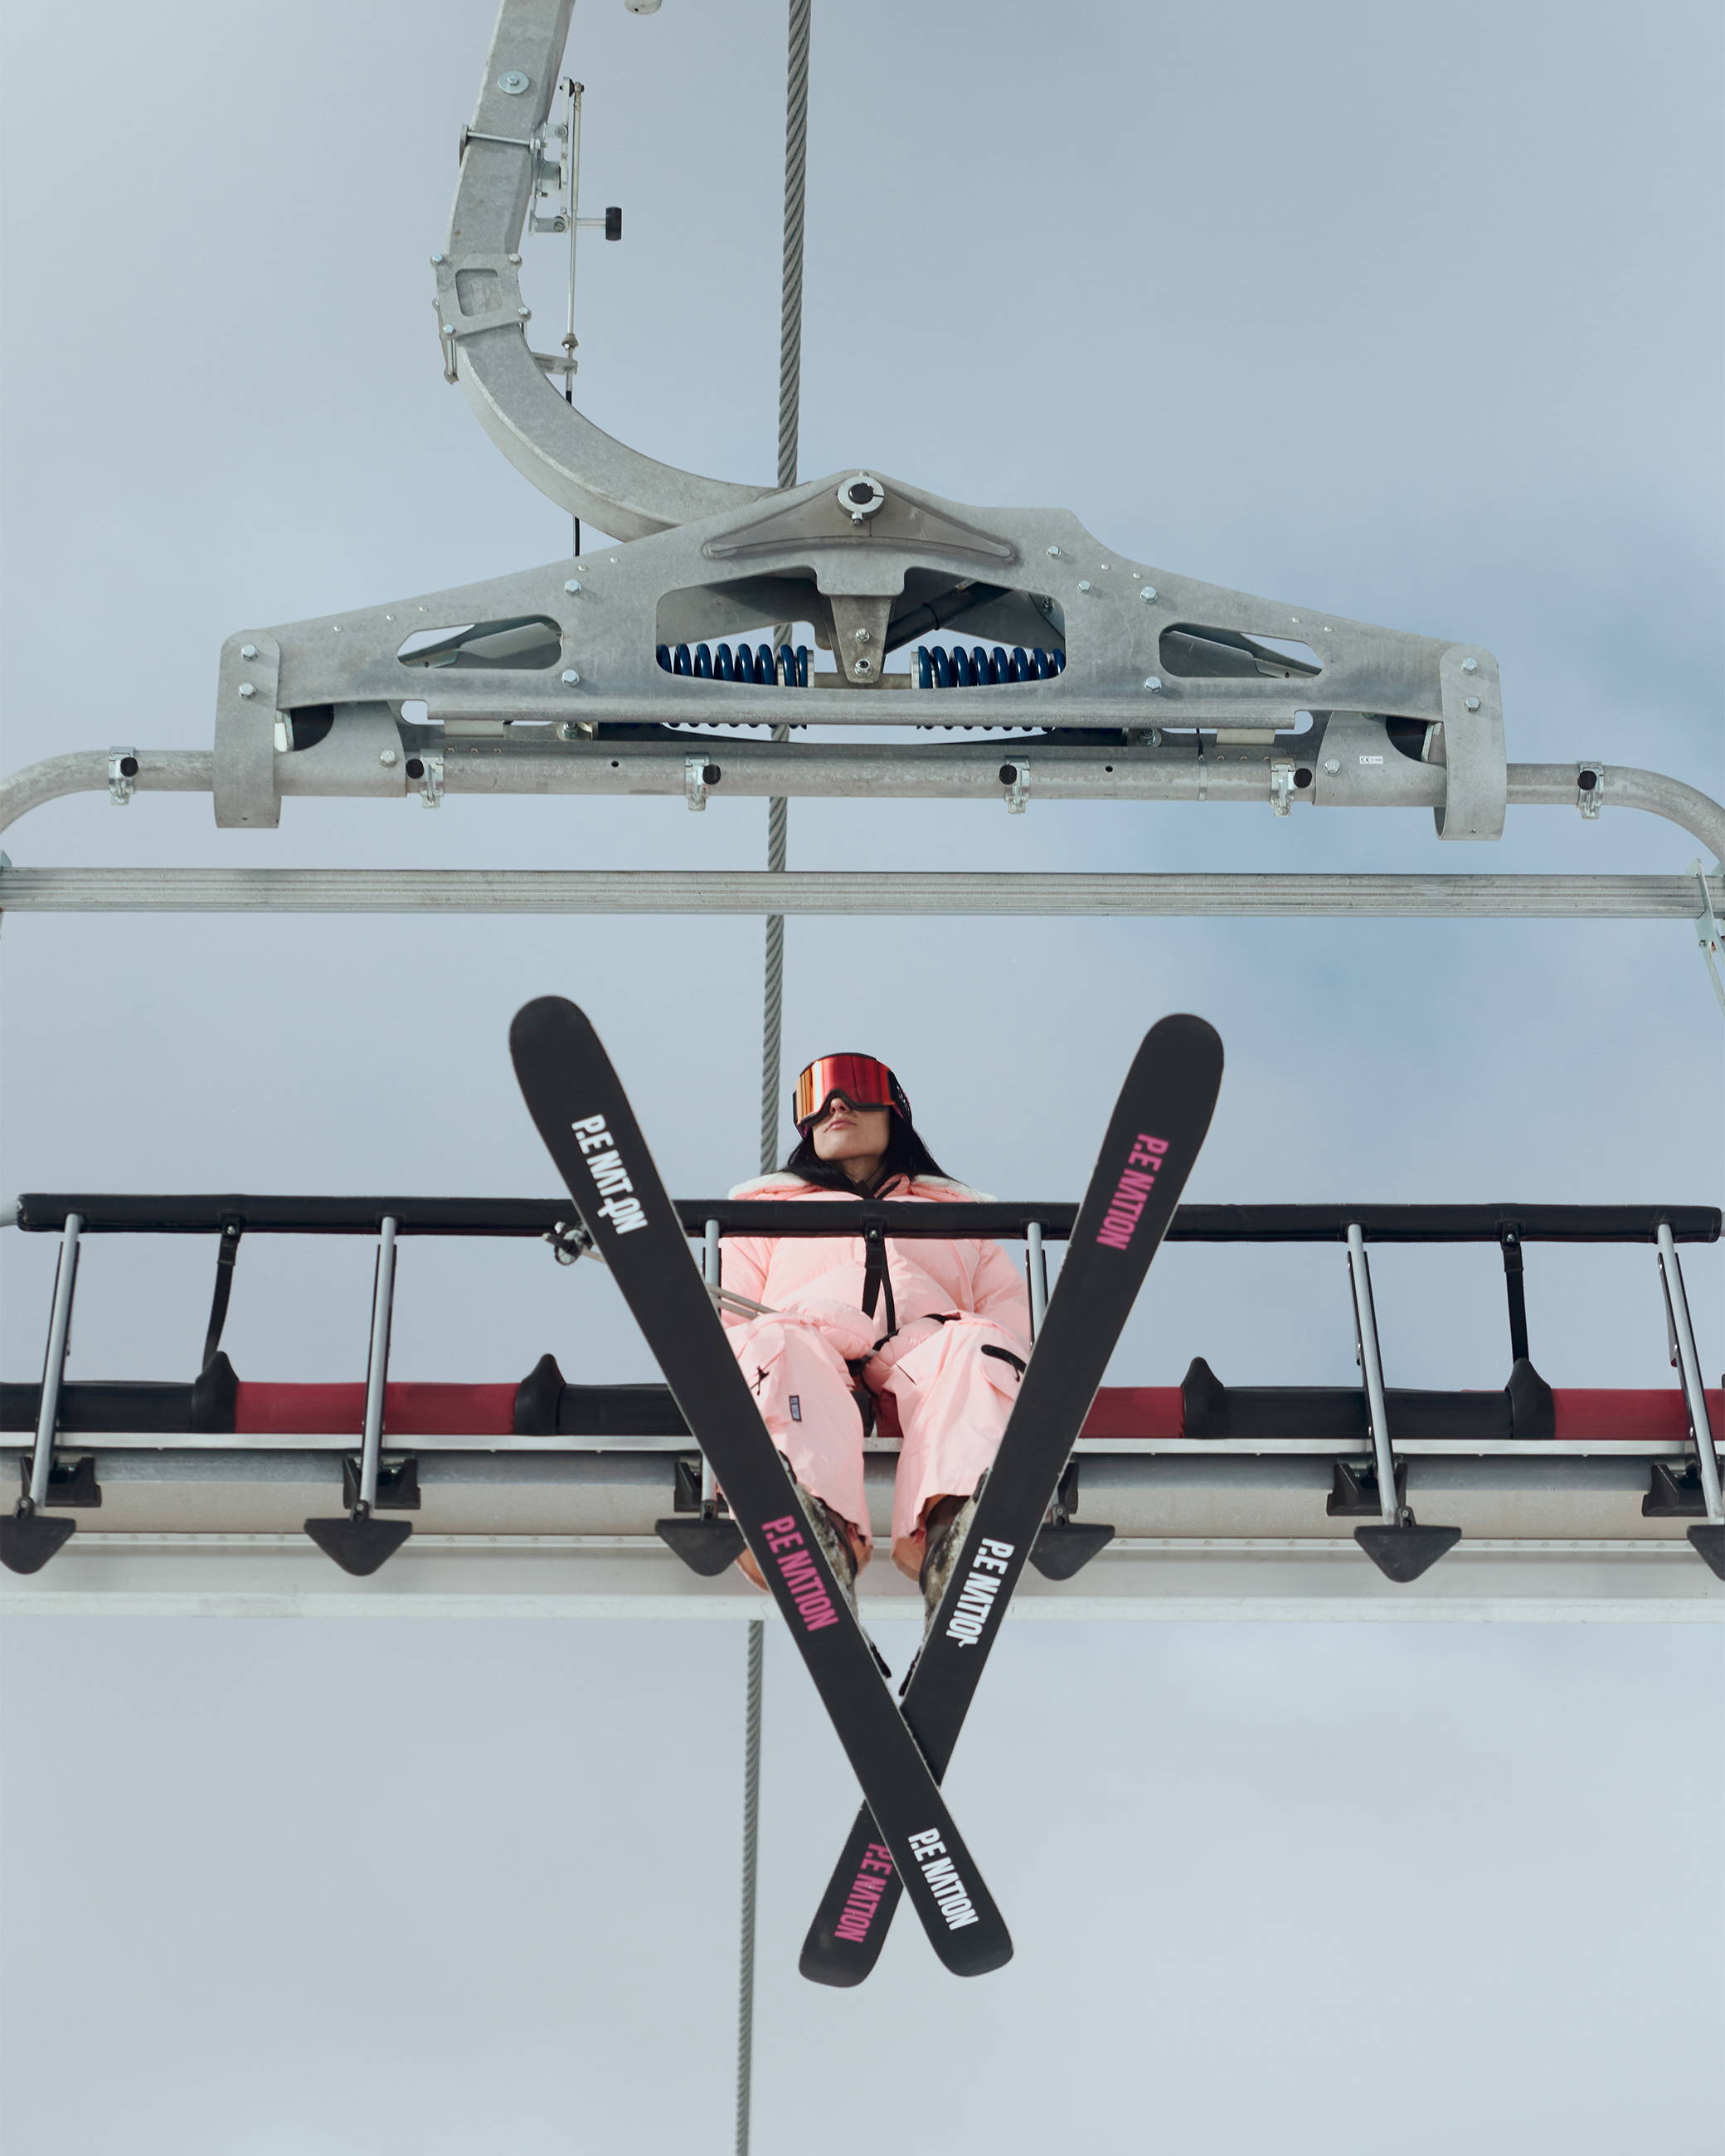 A girl sitting on a ski lift